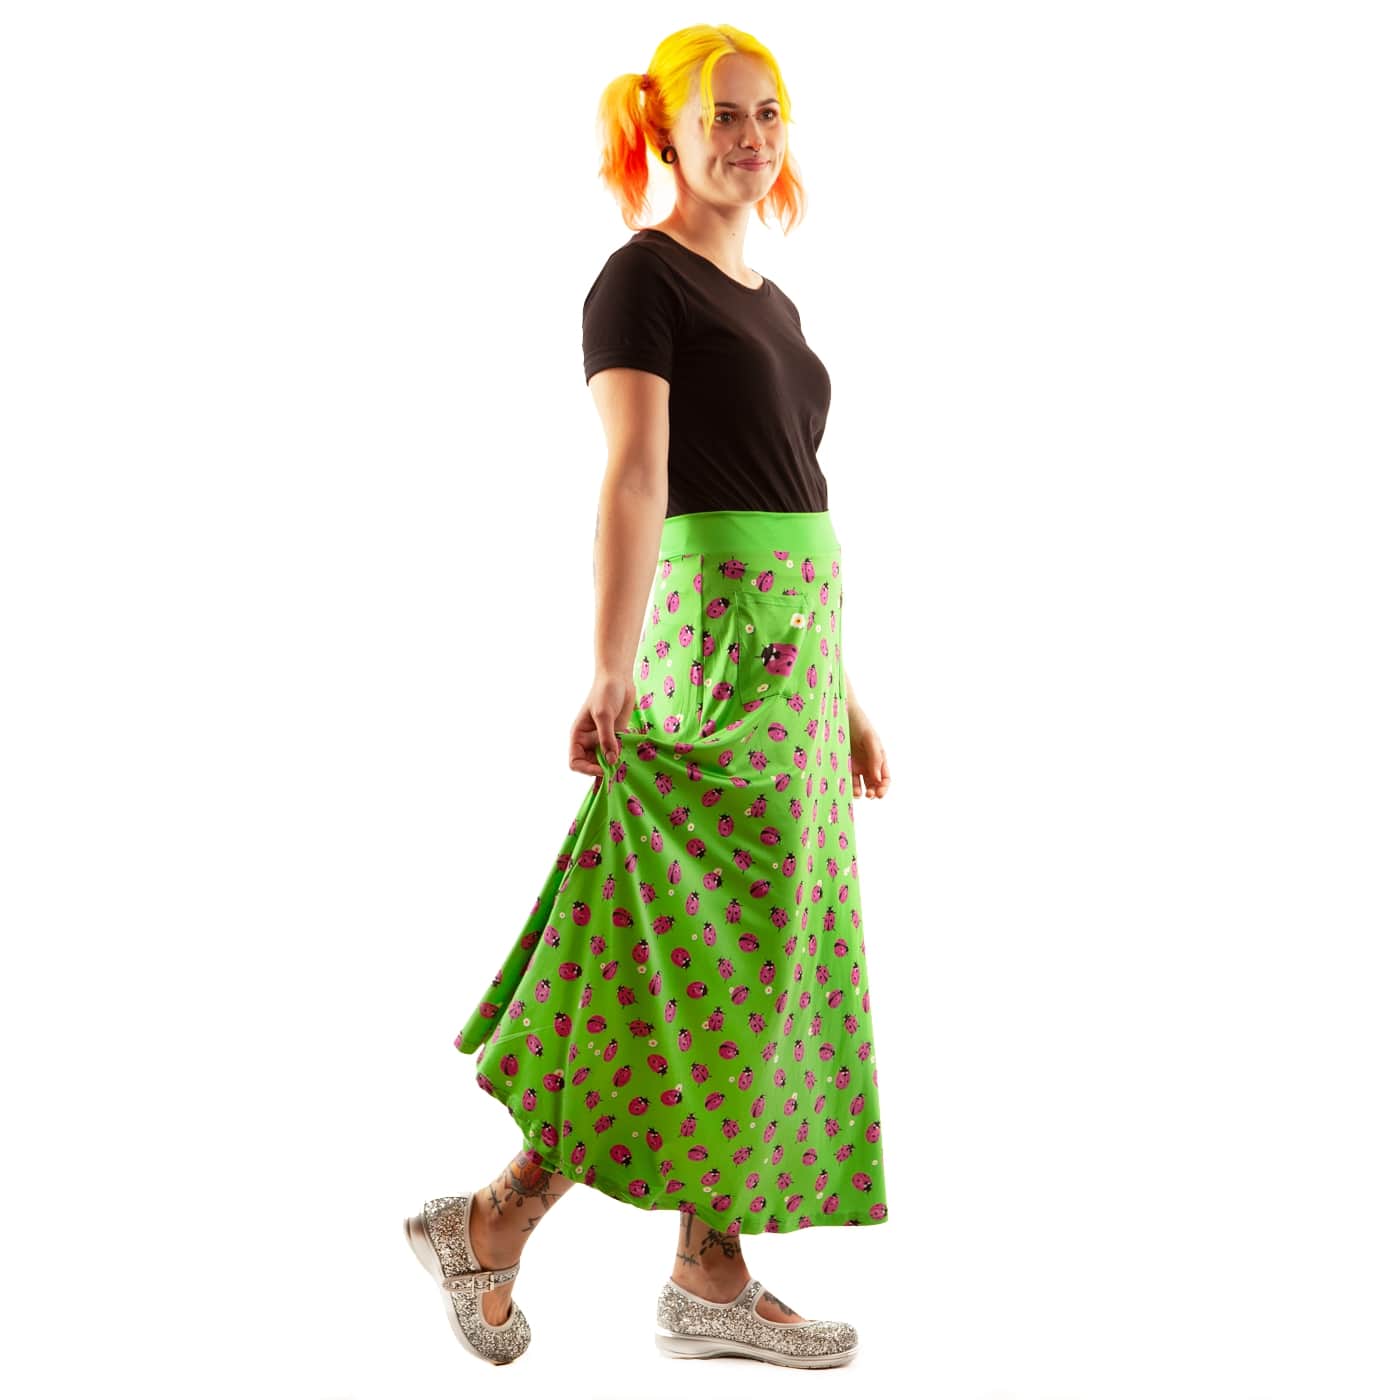 Loveliness Maxi Skirt by RainbowsAndFairies.com.au (Ladybugs - Lady Beetle - Animal Print - Skirt With Pockets - Boho - Mod Retro - Vintage Inspired) - SKU: CL_MAXIS_LOVLY_ORG - Pic-04